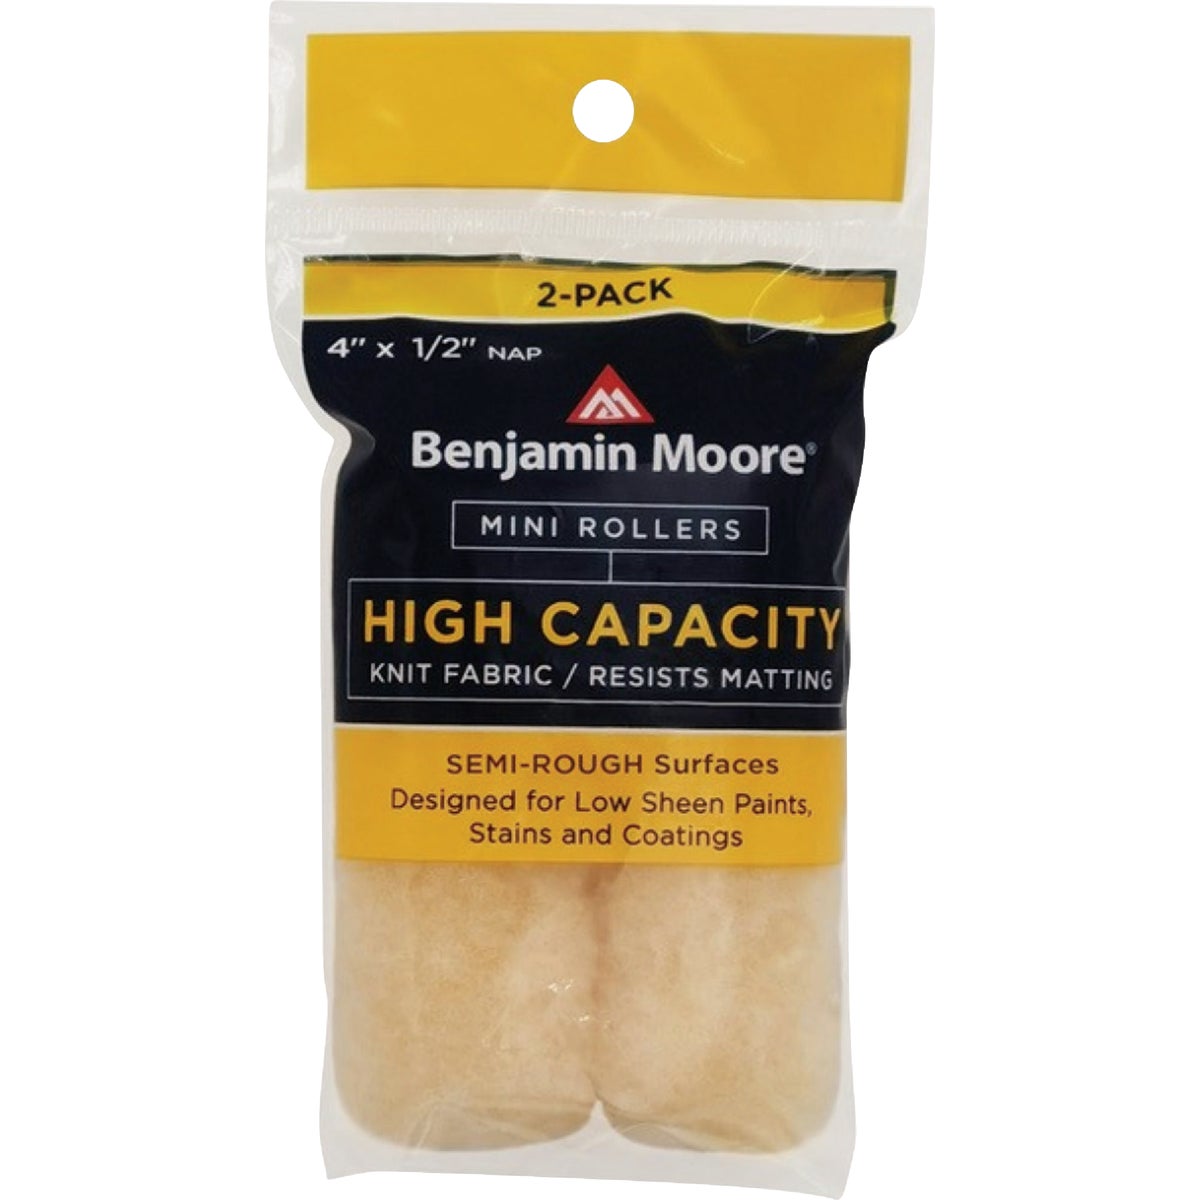 Benjamin Moore 4 In. x 1/2 In. High Capacity Mini Roller (2-Pack)